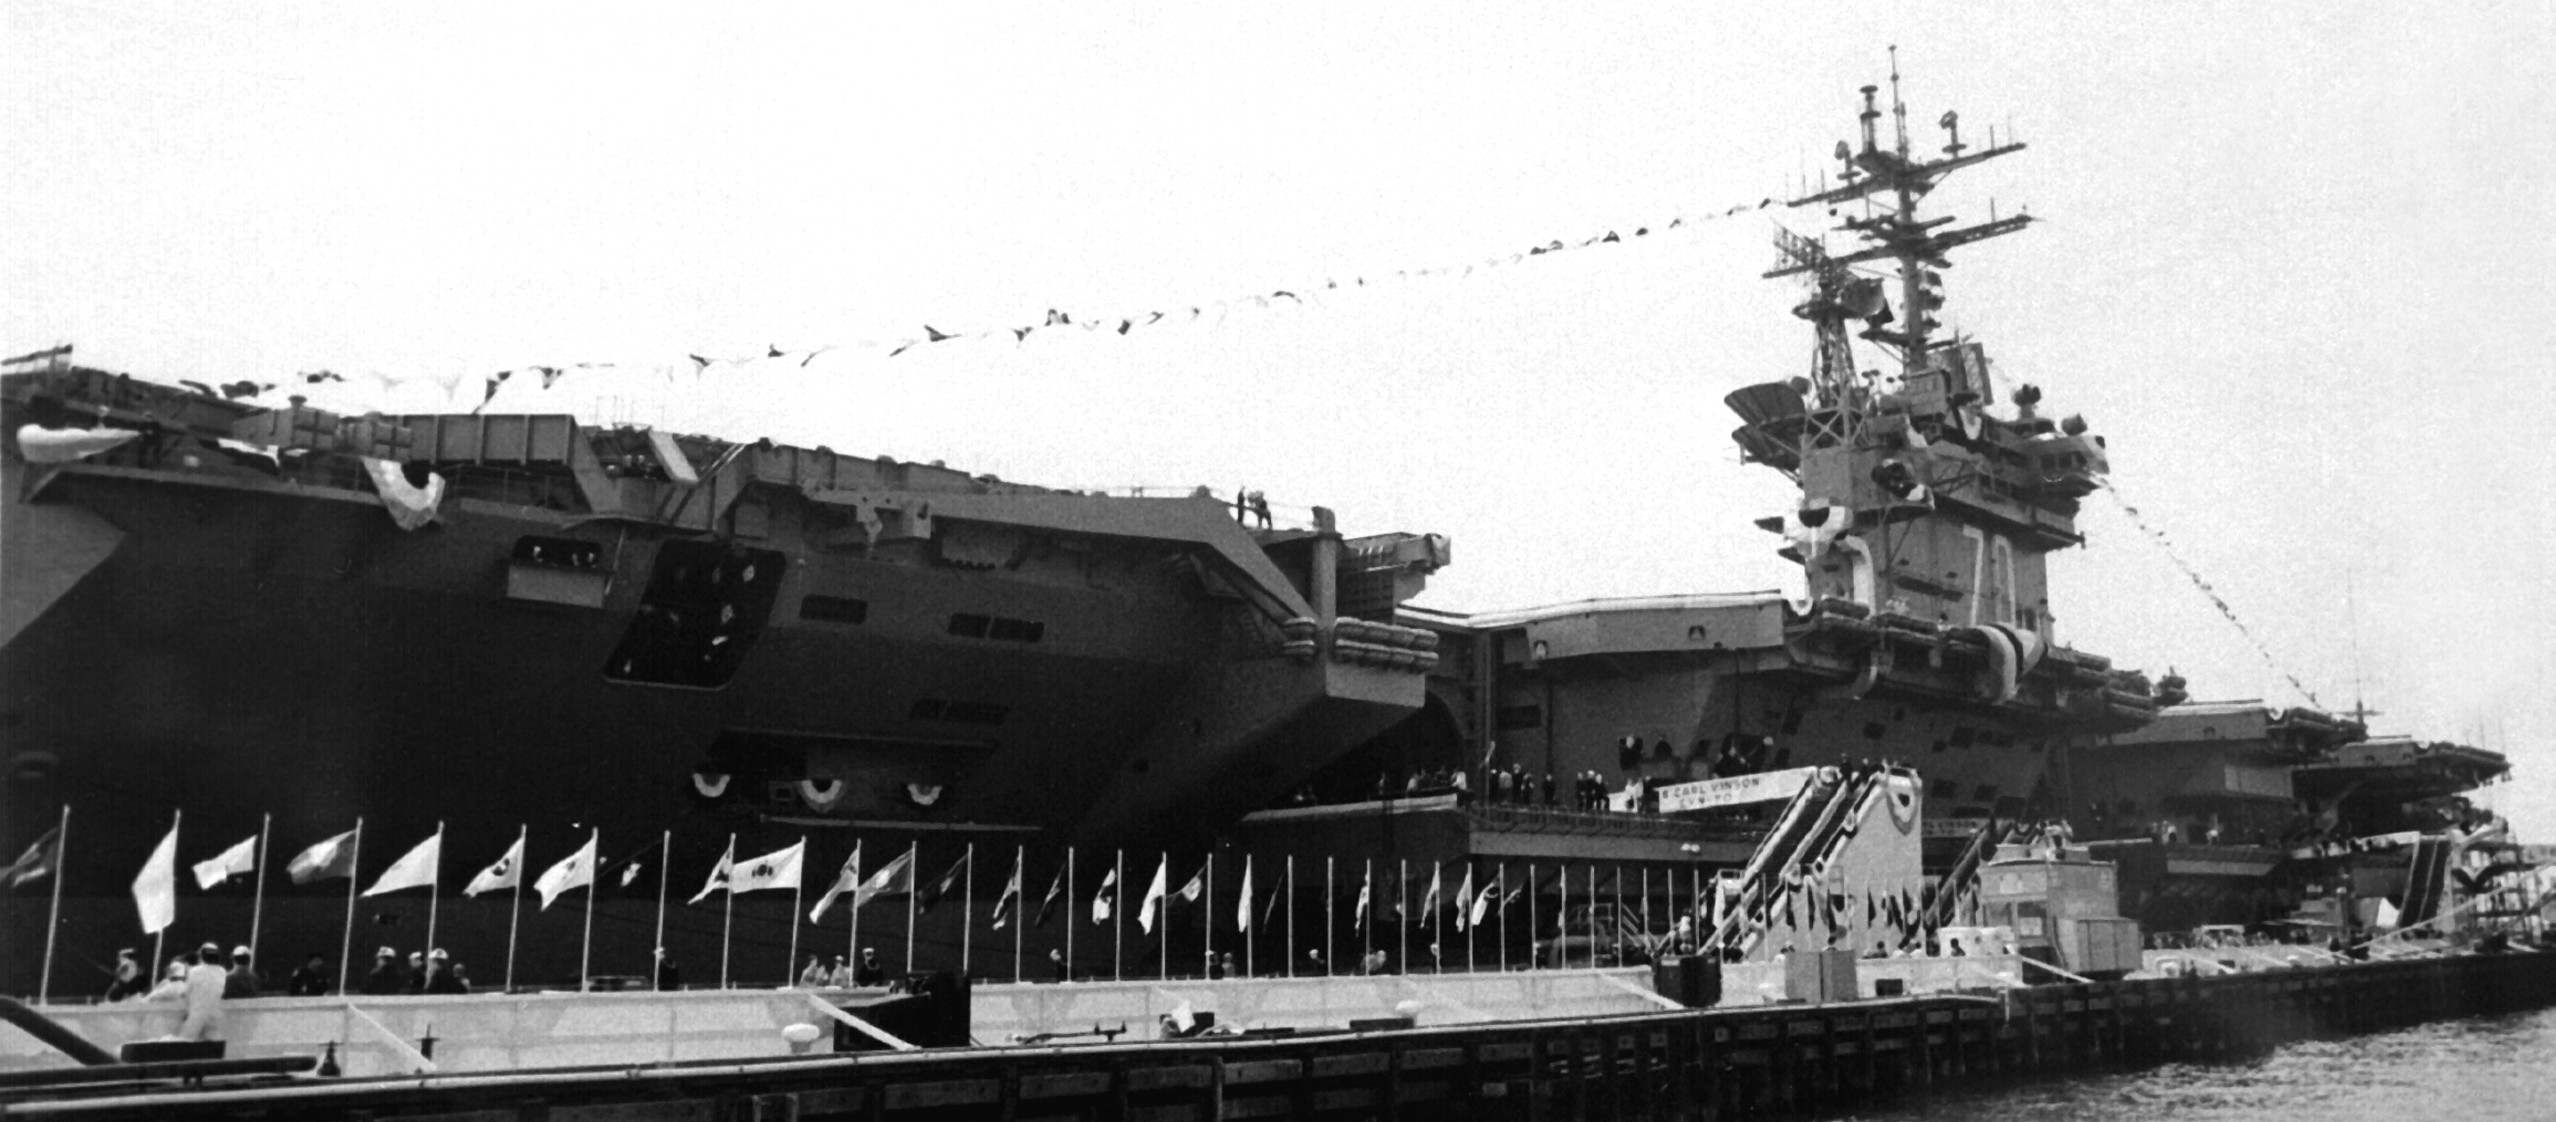 cvn-70 uss carl vinson nimitz class aircraft carrier us navy commissioning ceremony 1982 75